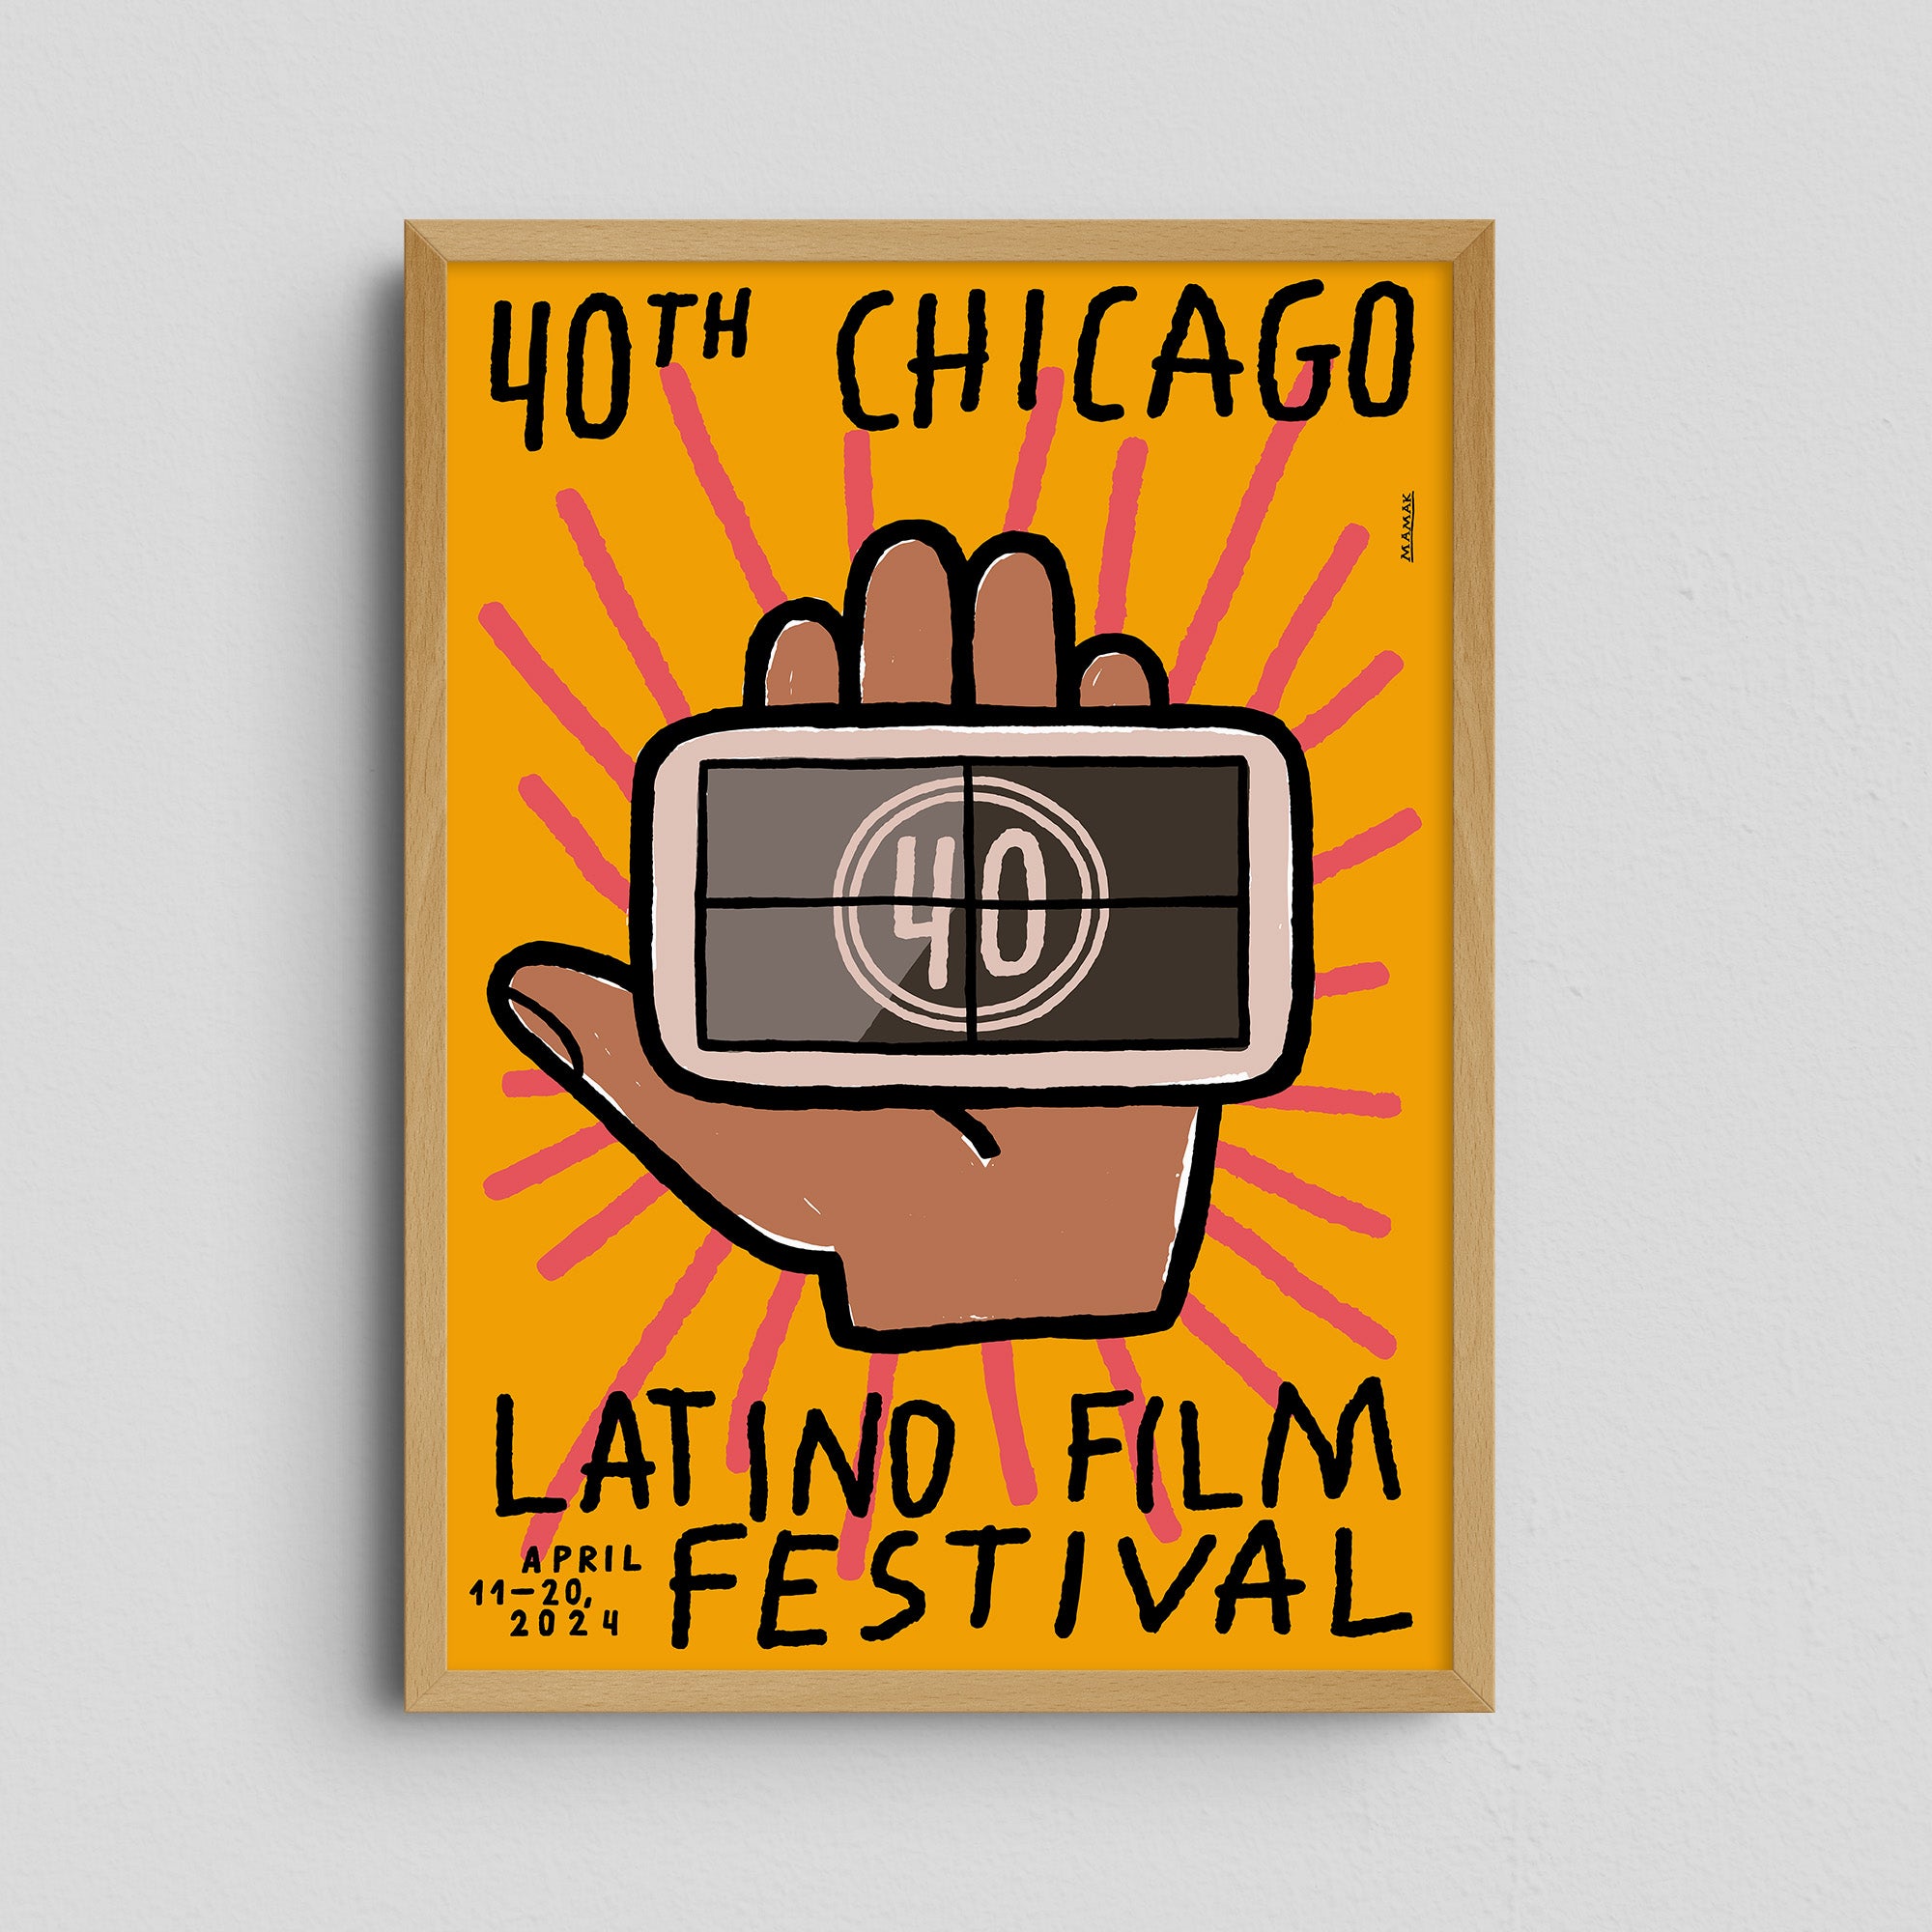 Chicago Latino Film Festival - Bartosz Mamak